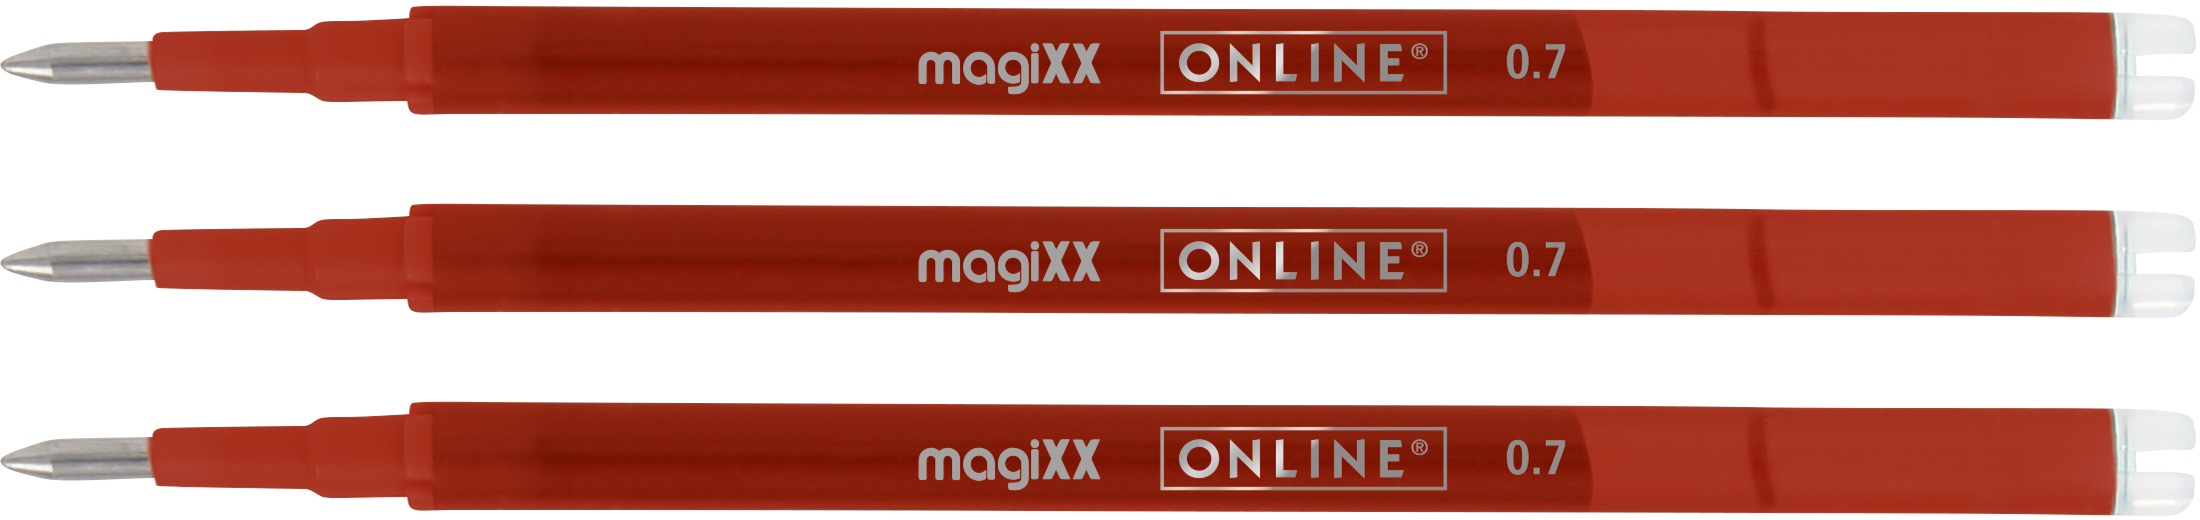 ONLINE Mine Gel MagiXX 40162/3 rouge, Tag-Bag 0.7mm